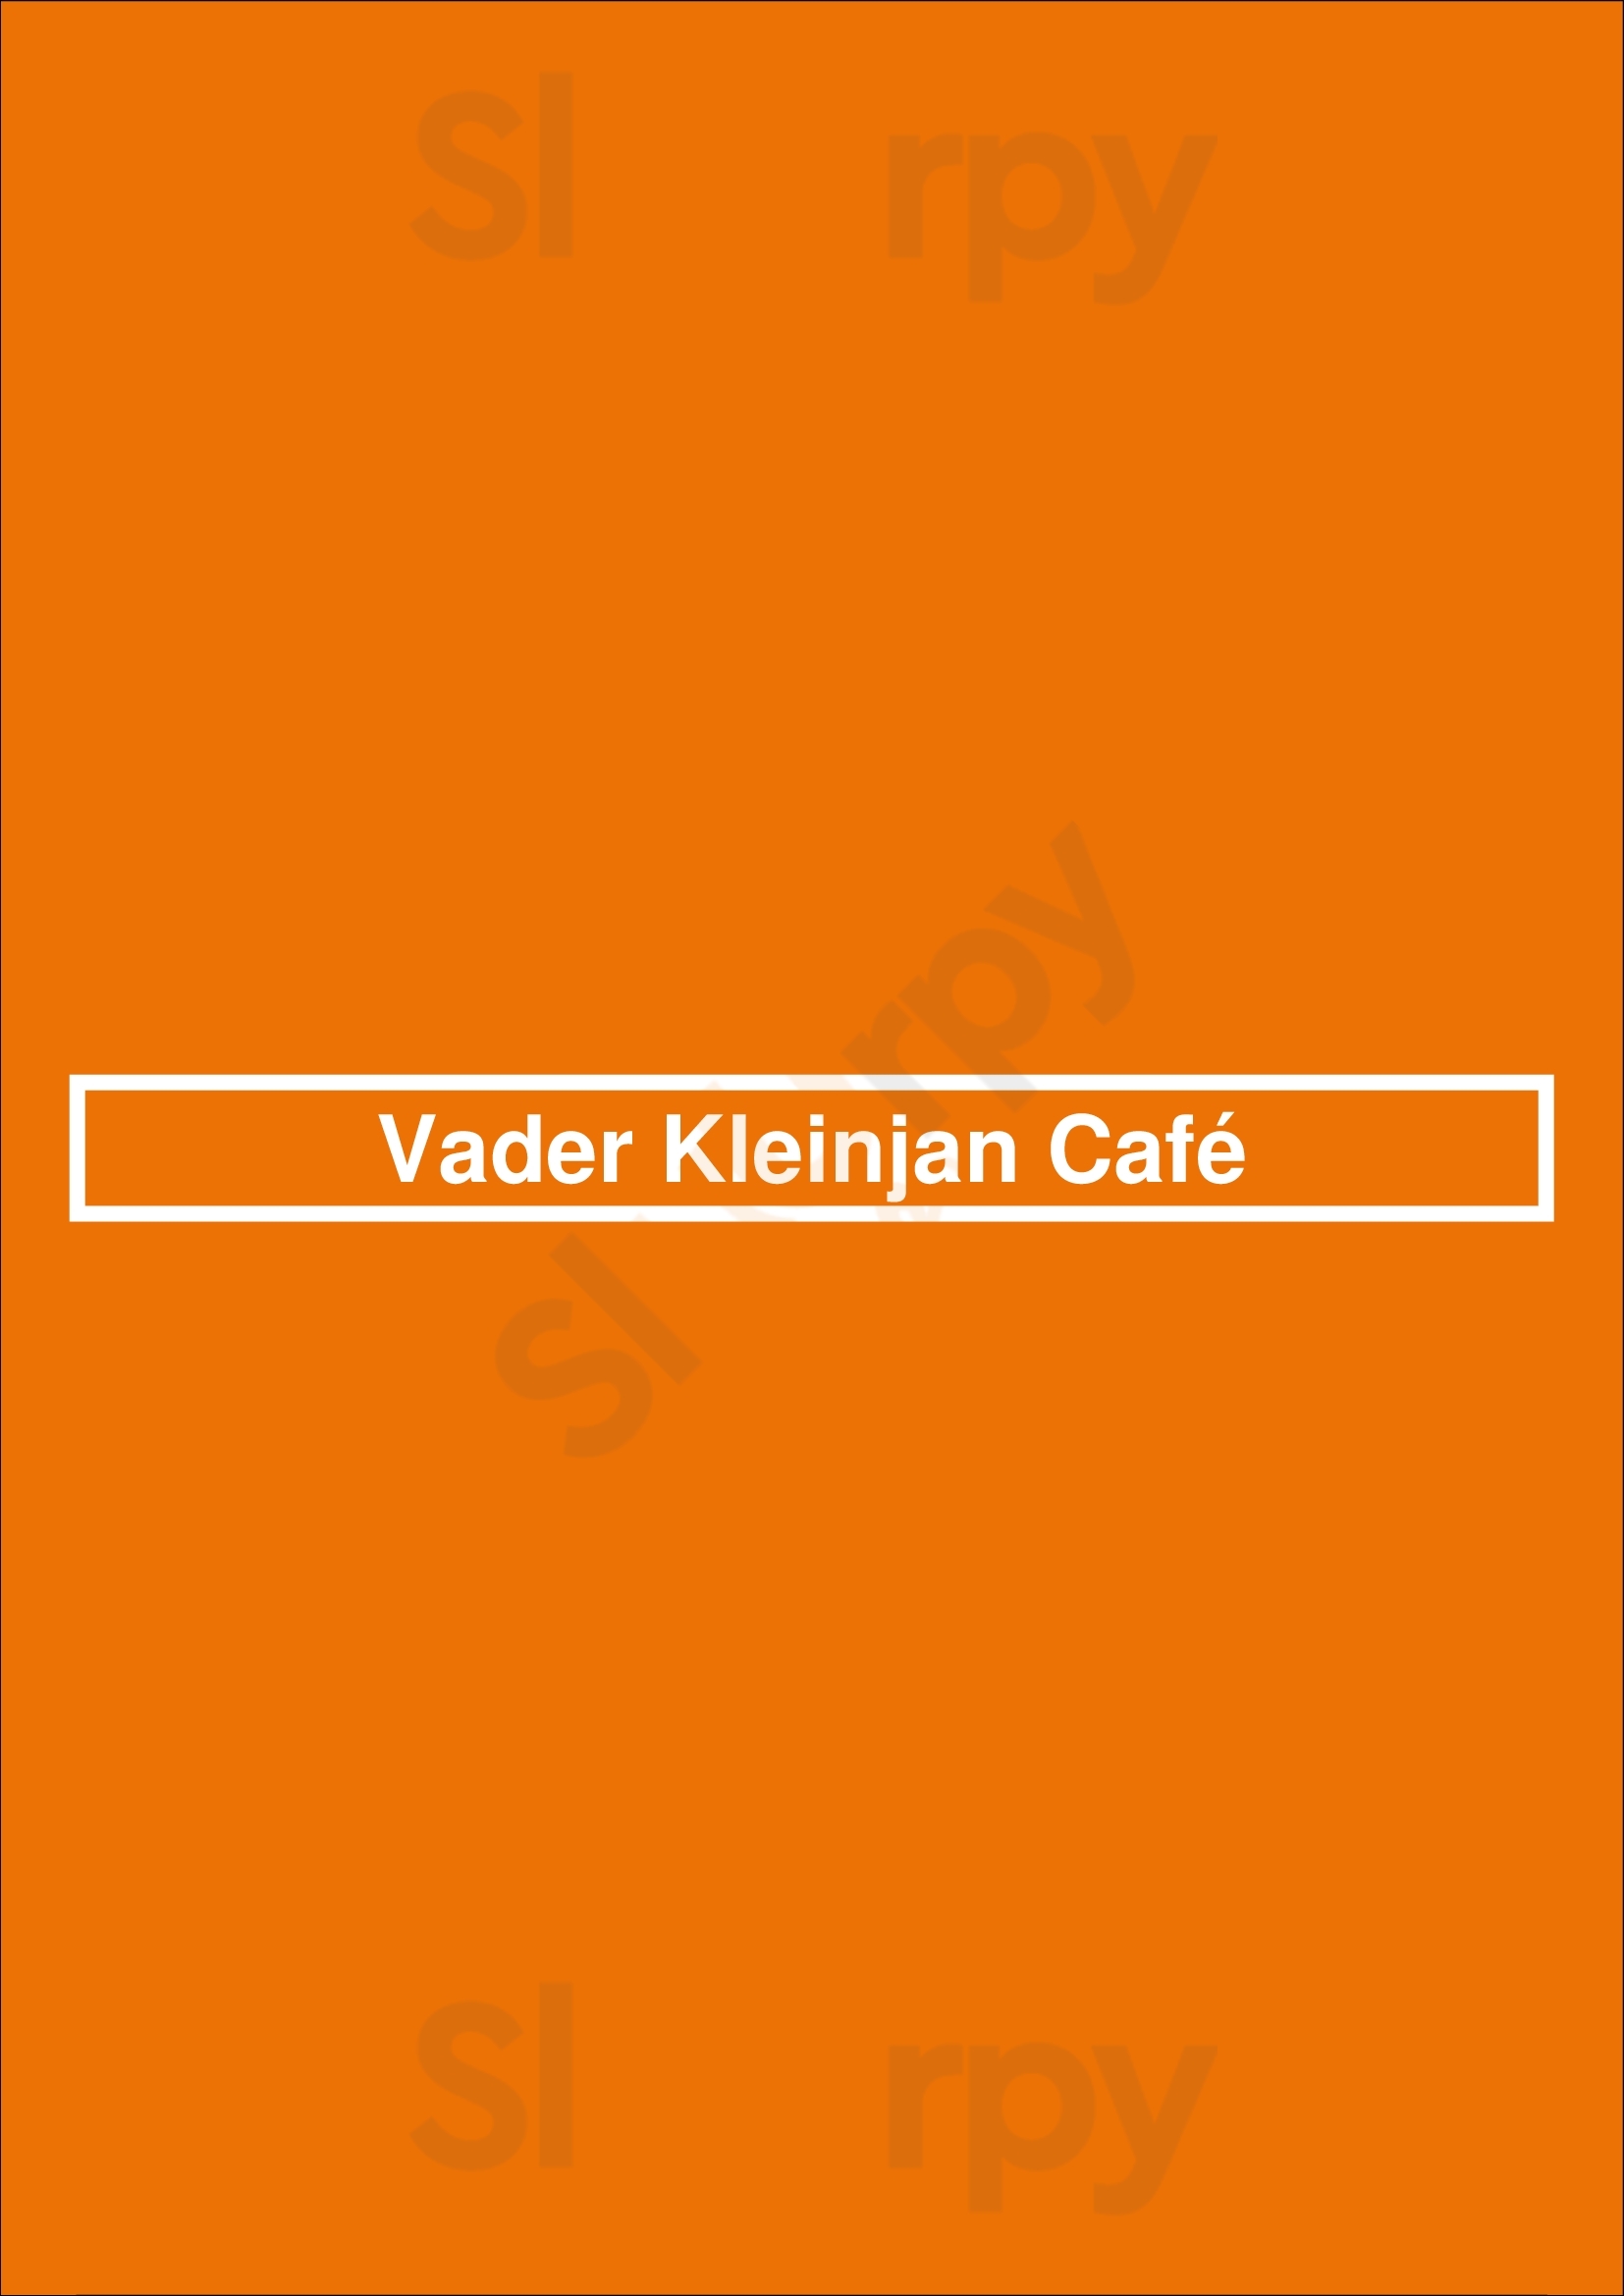 Vader Kleinjan Café Rotterdam Menu - 1